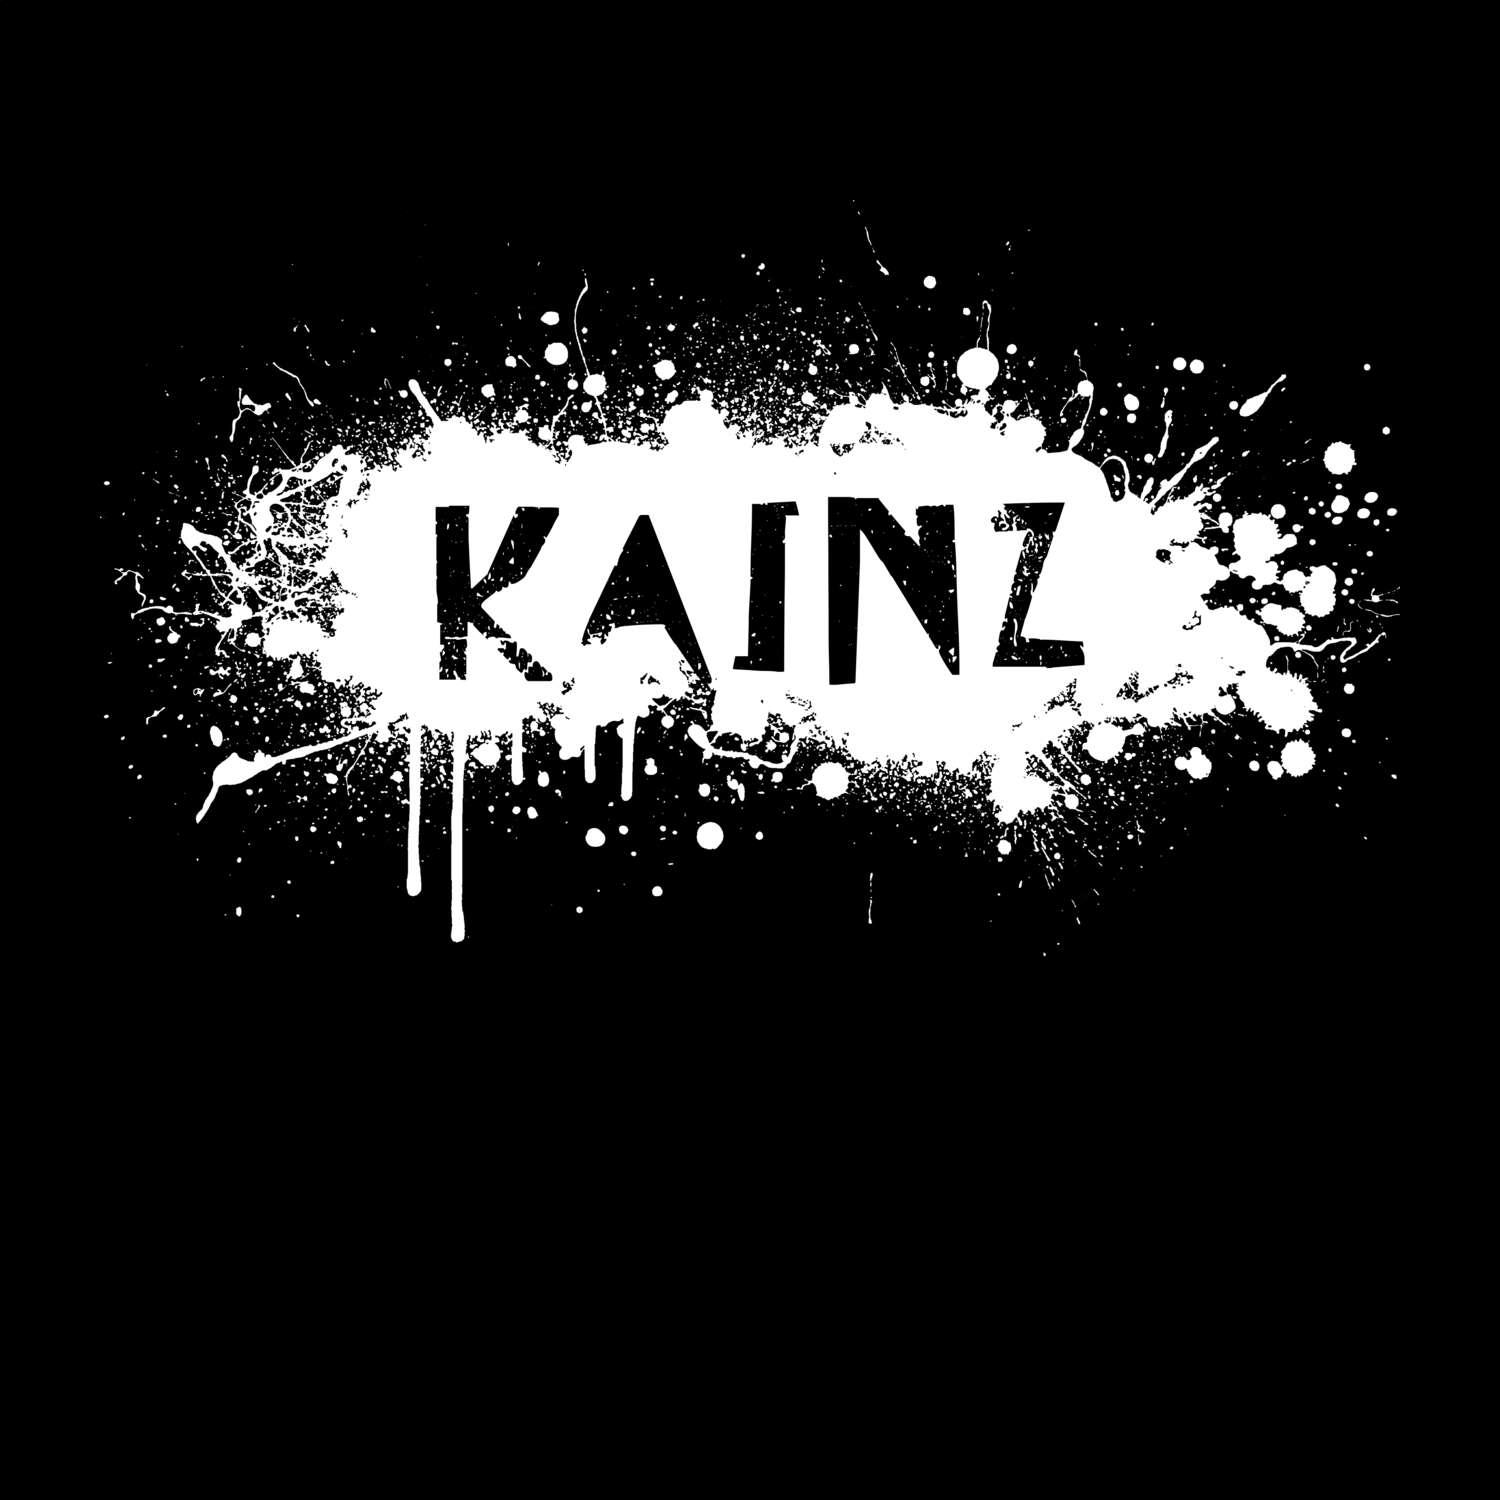 Kainz T-Shirt »Paint Splash Punk«